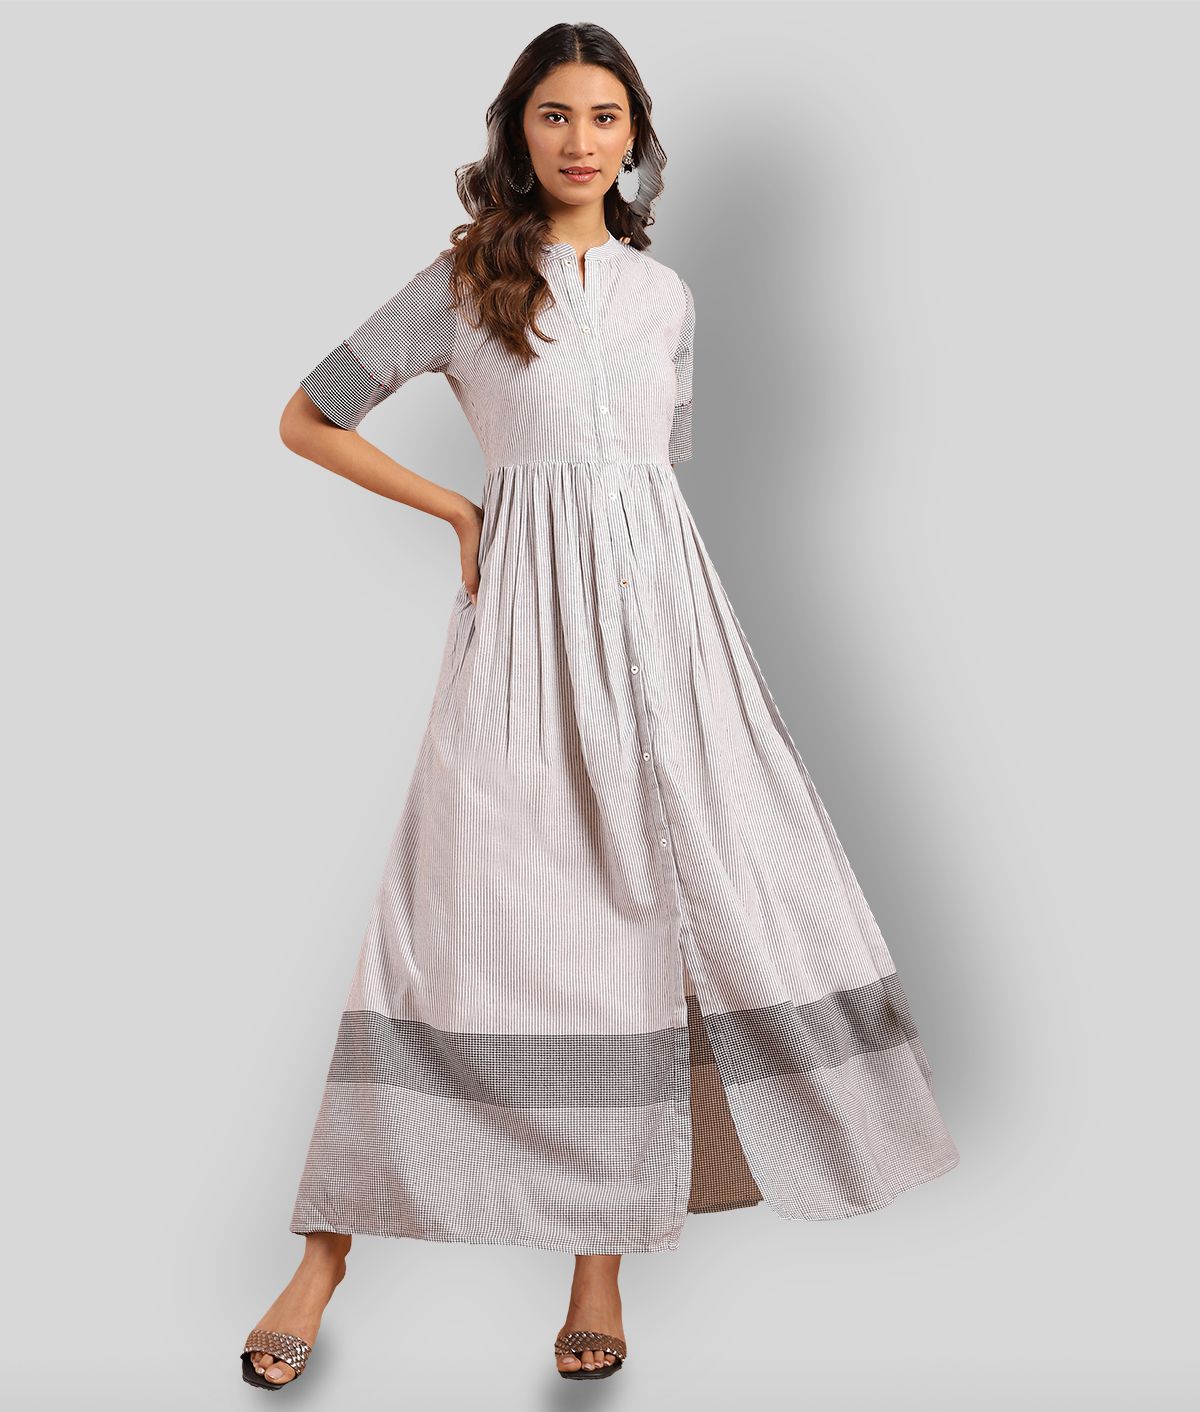 Janasya - Light Grey Cotton Women's Fit And Flare Dress ( Pack of 1 )